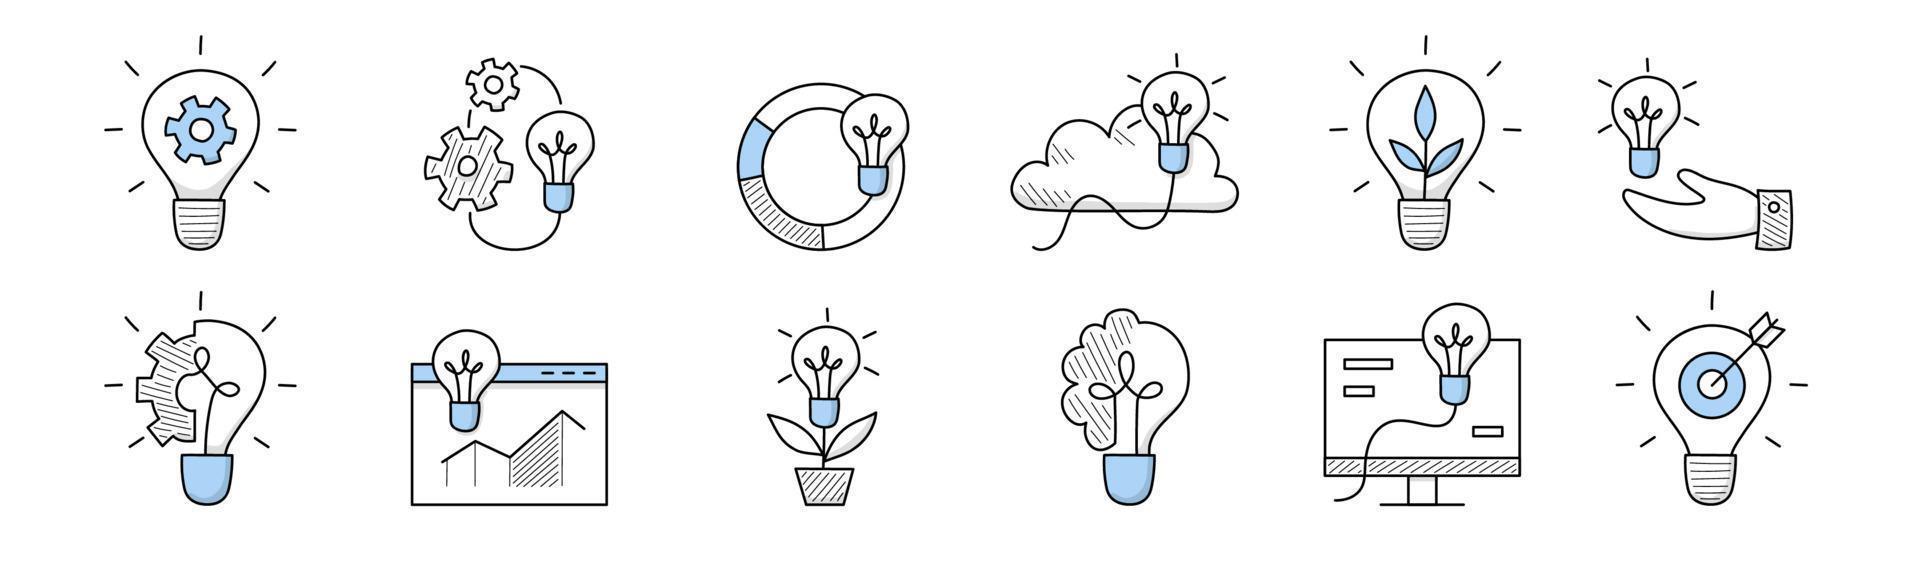 Idea icons, doodle business signs light bulbs set vector